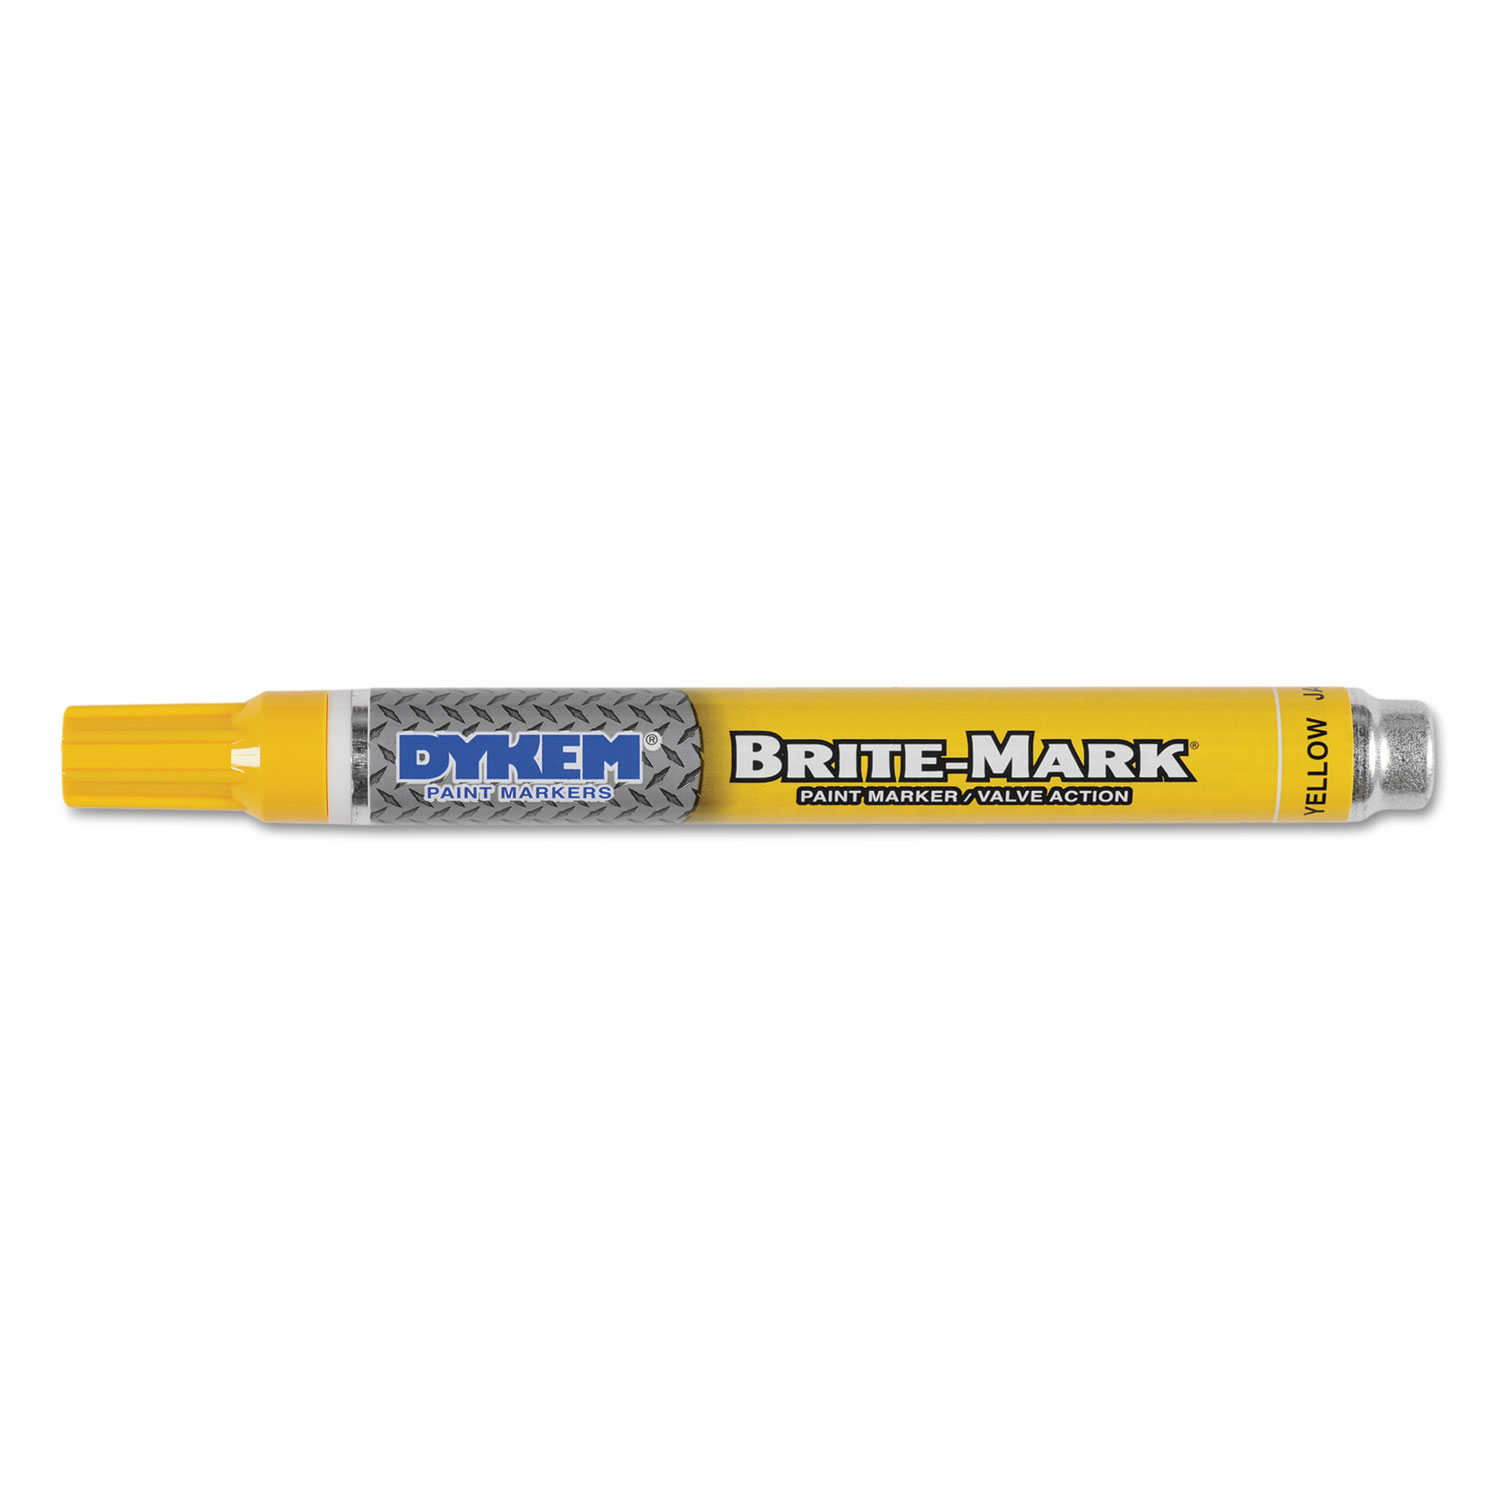  DYKEM 84004 BRITE-MARK Paint Markers, Medium Bullet Tip, Yellow (ITW84004) 